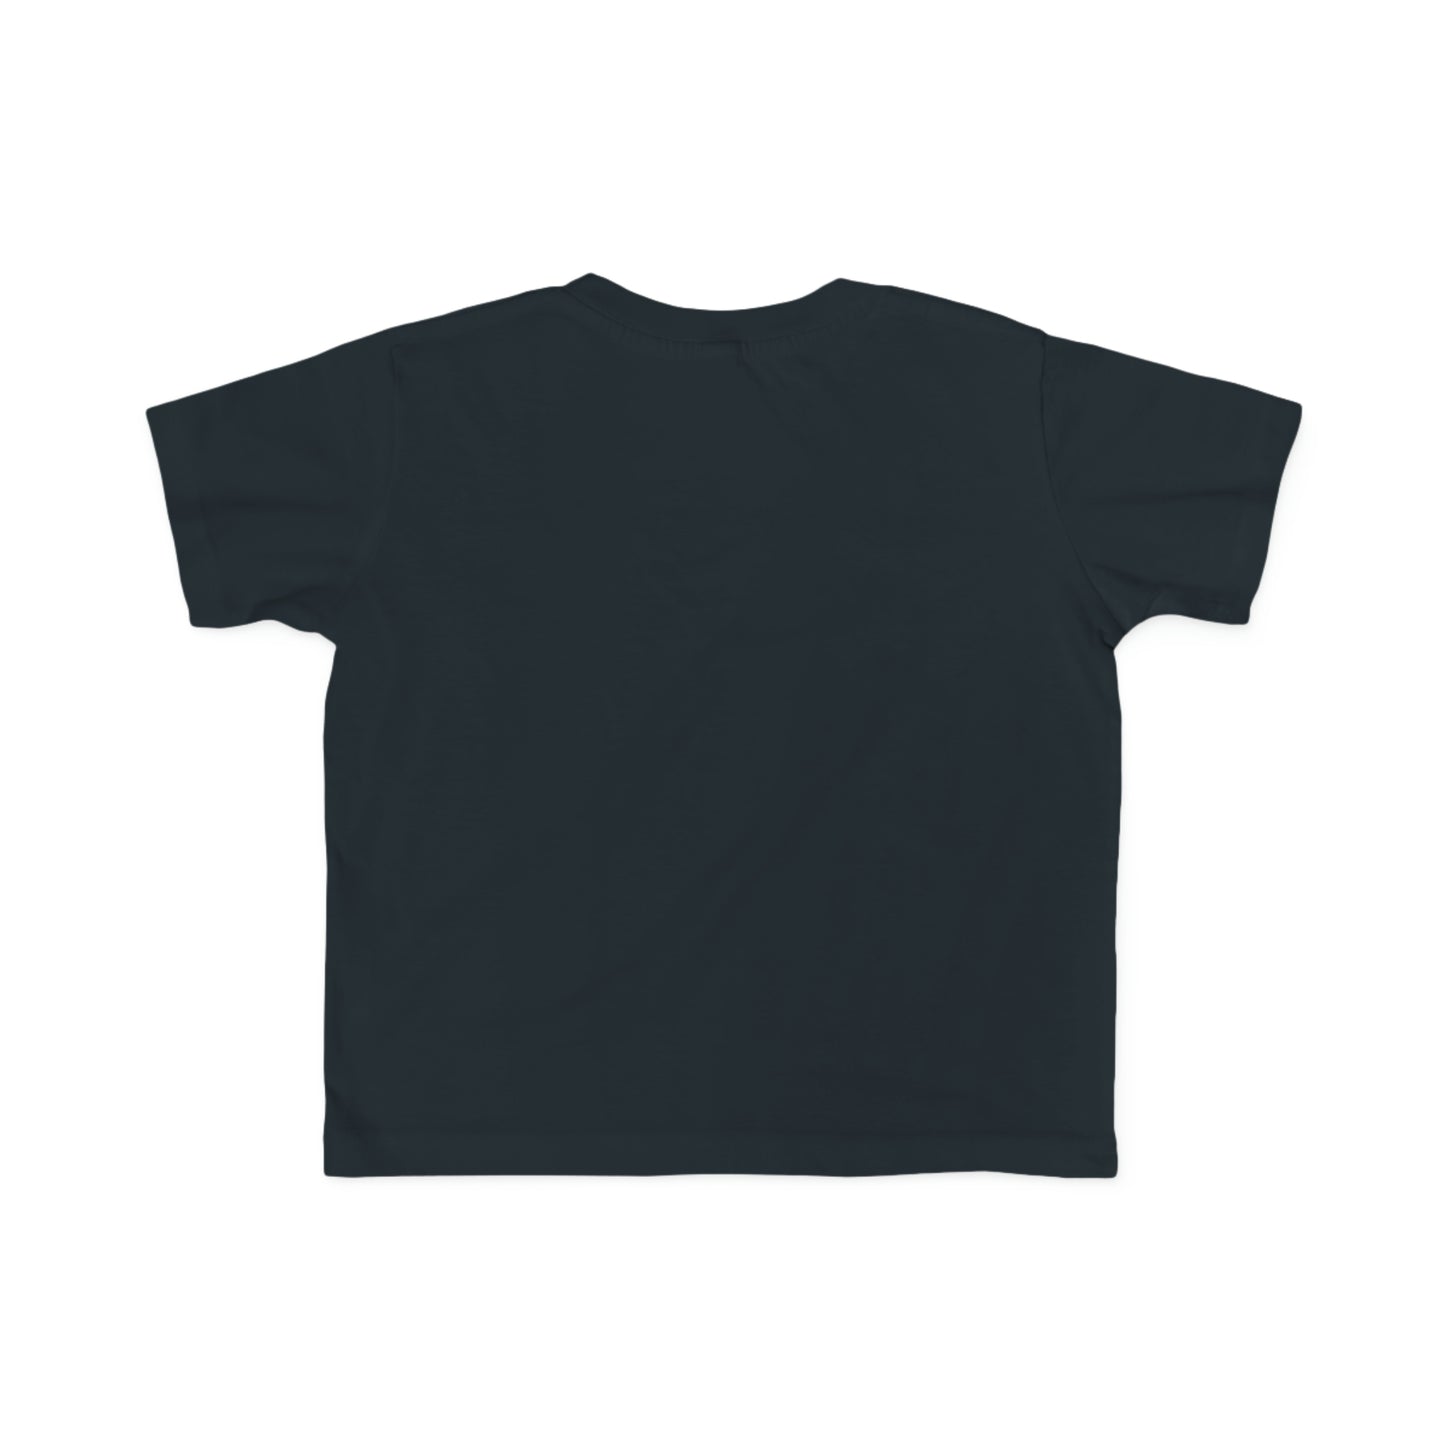 Toddler Straw-bear-ries Unisex Print Short-Sleeve T-Shirt